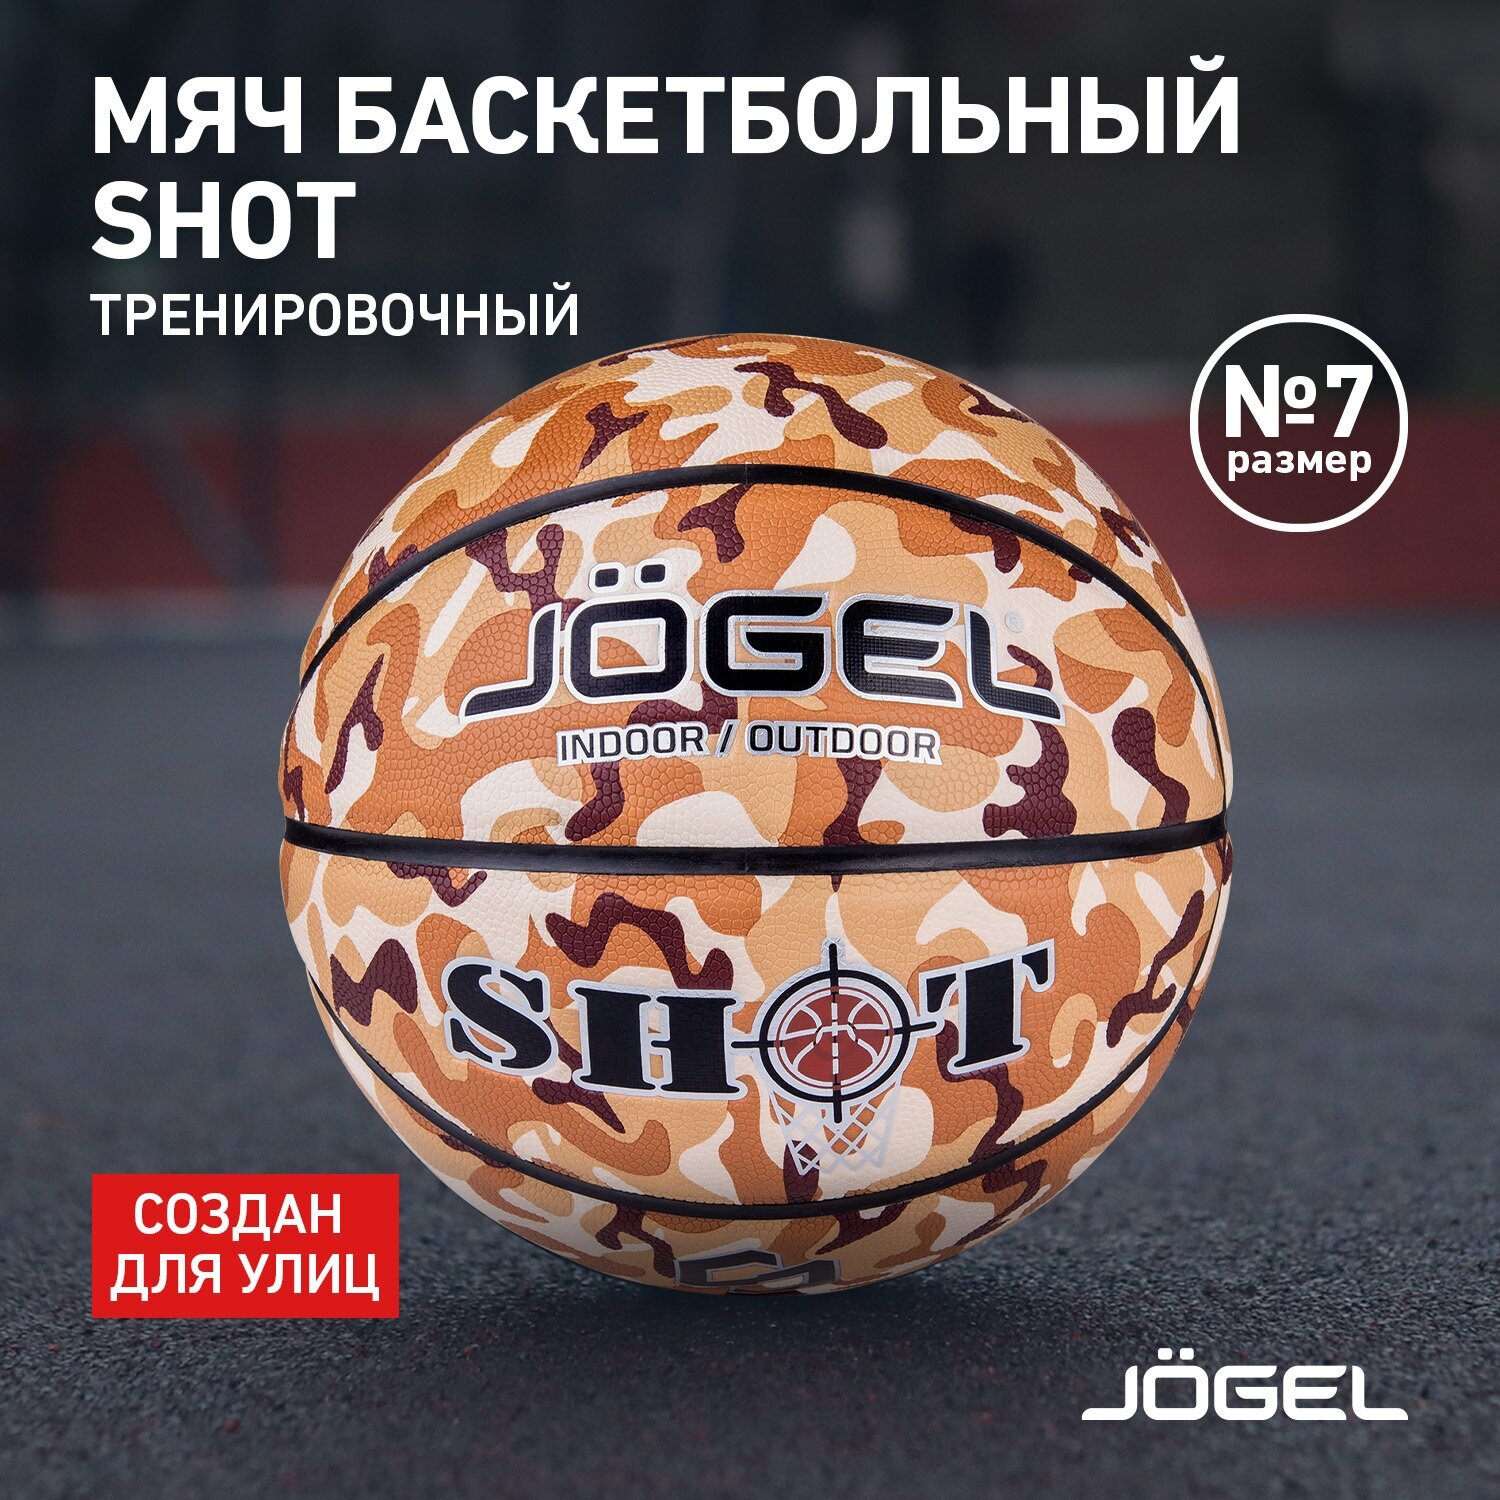 Баскетбольный мяч Jogel ALL-STAR для уличного баскетбола, размер 6